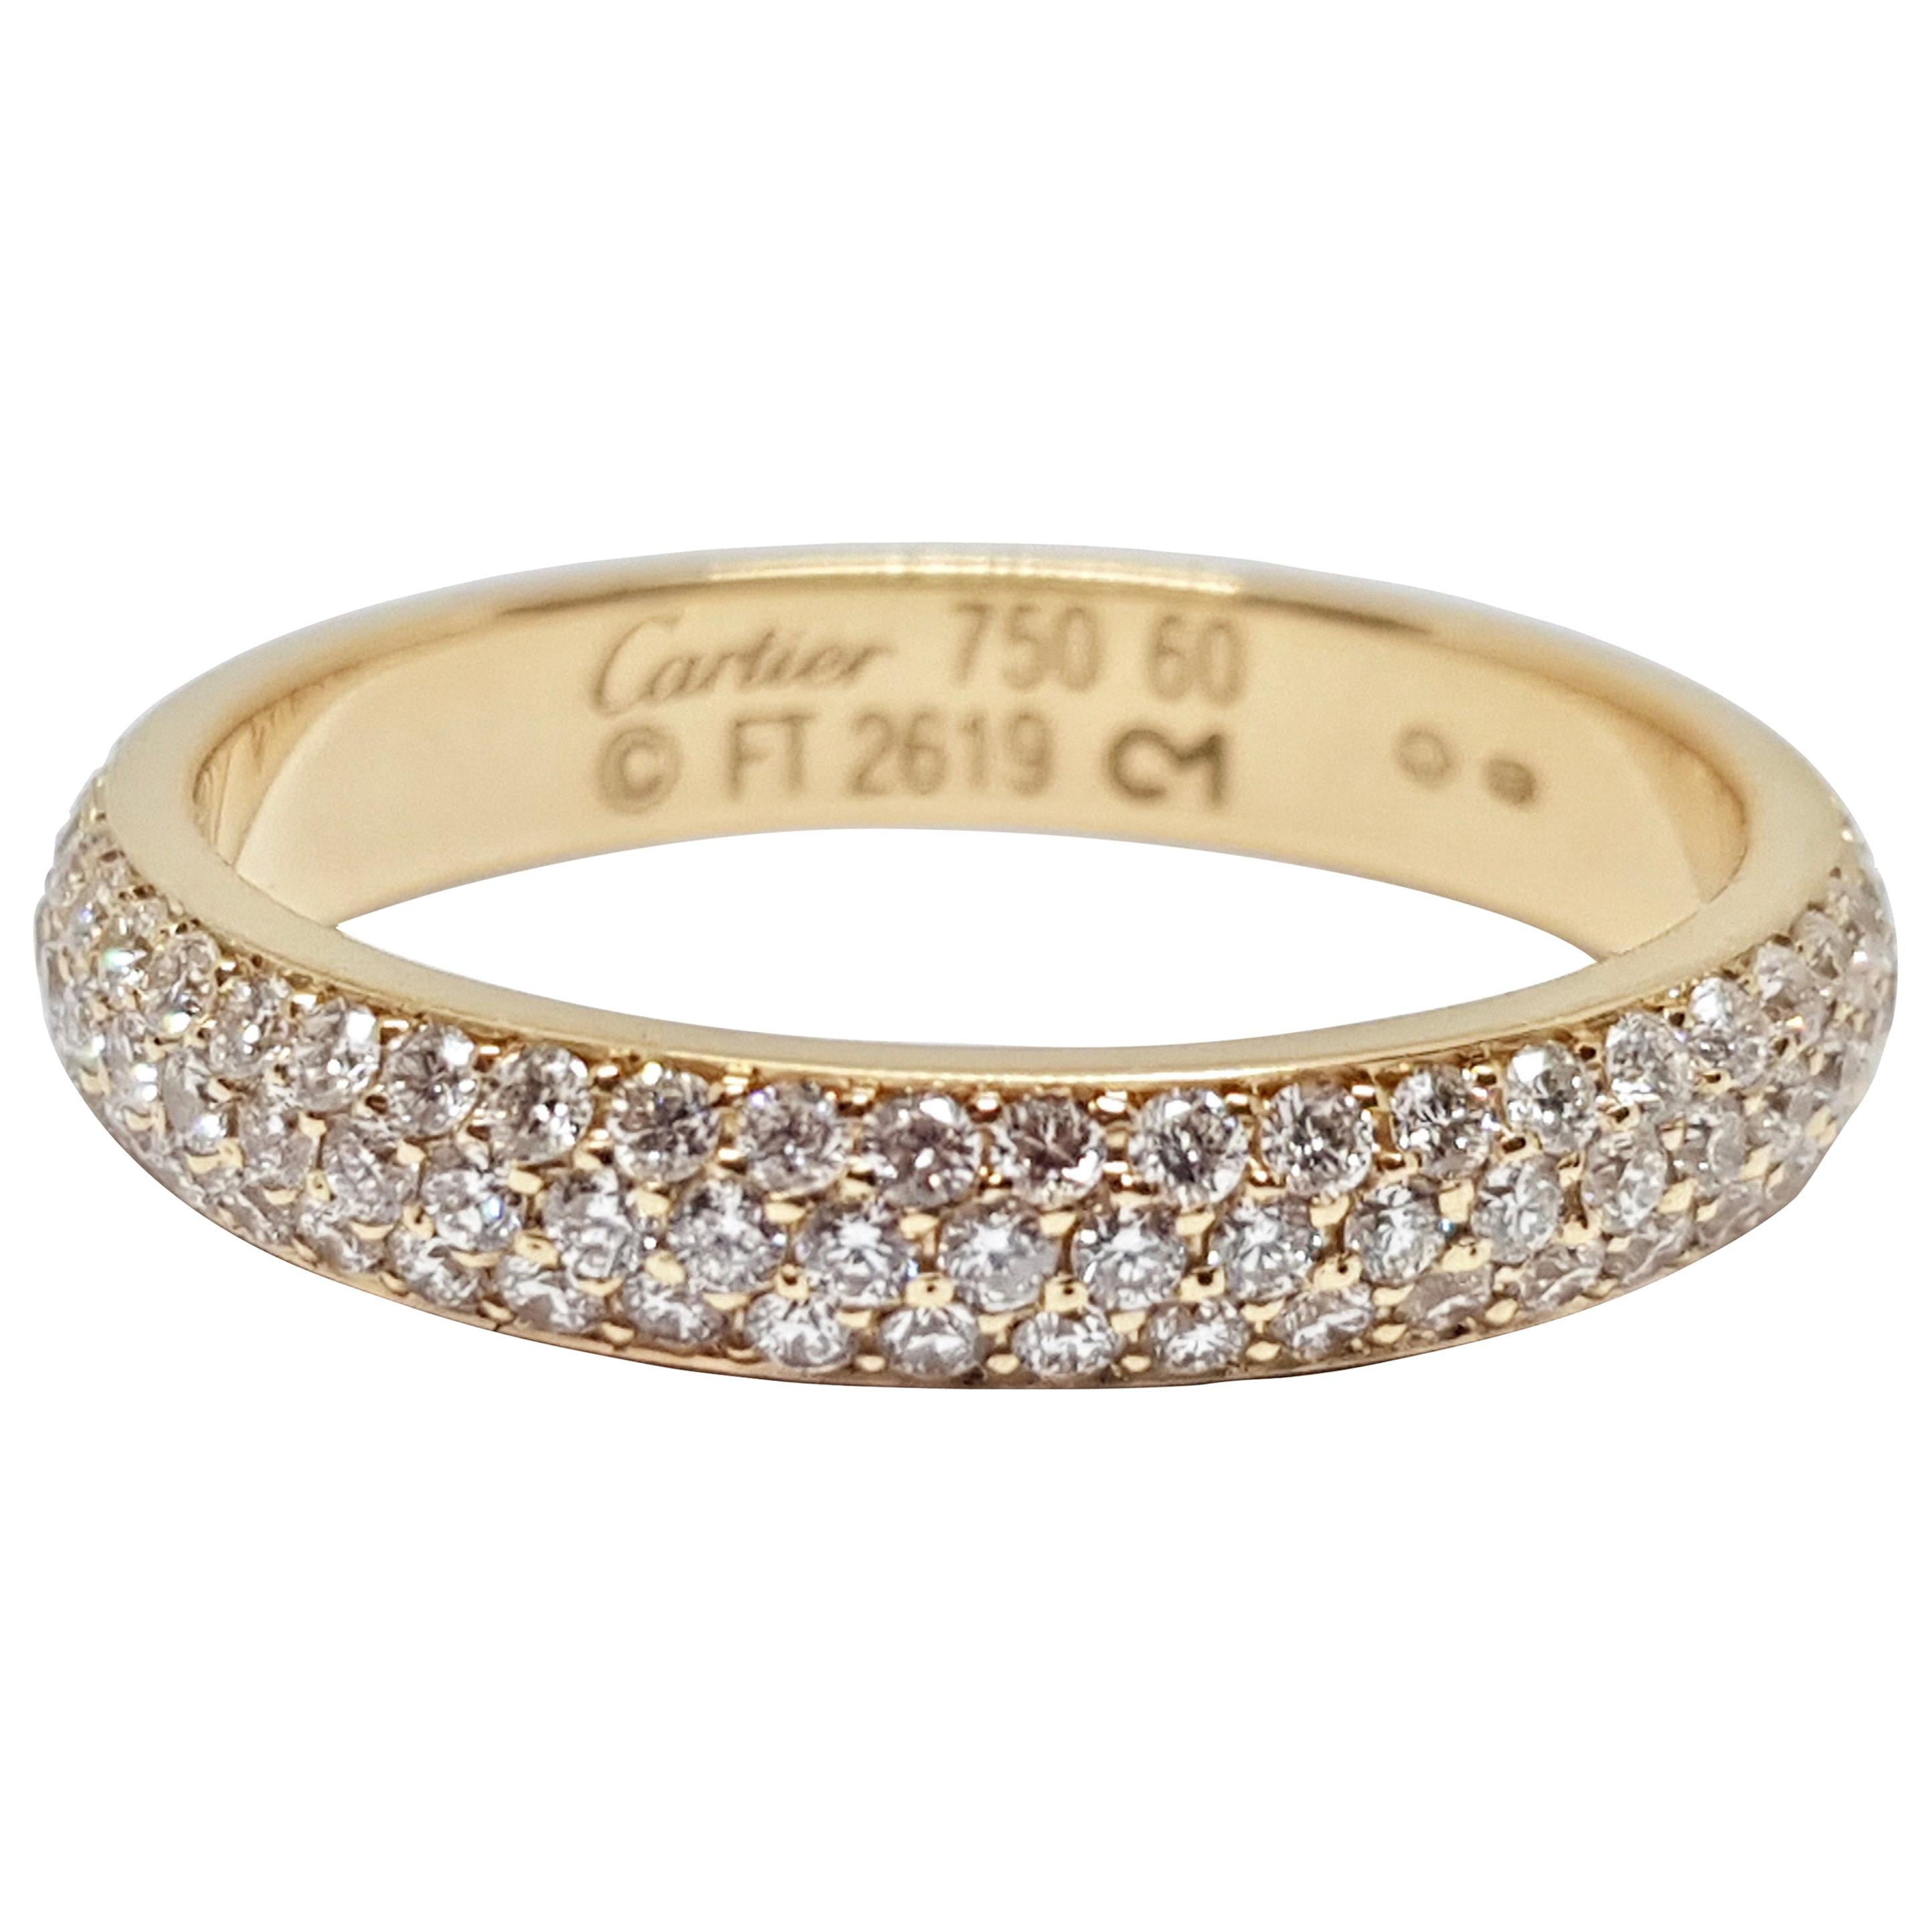 Cartier Diamond Band Ring Yellow Gold 1.38 Carat